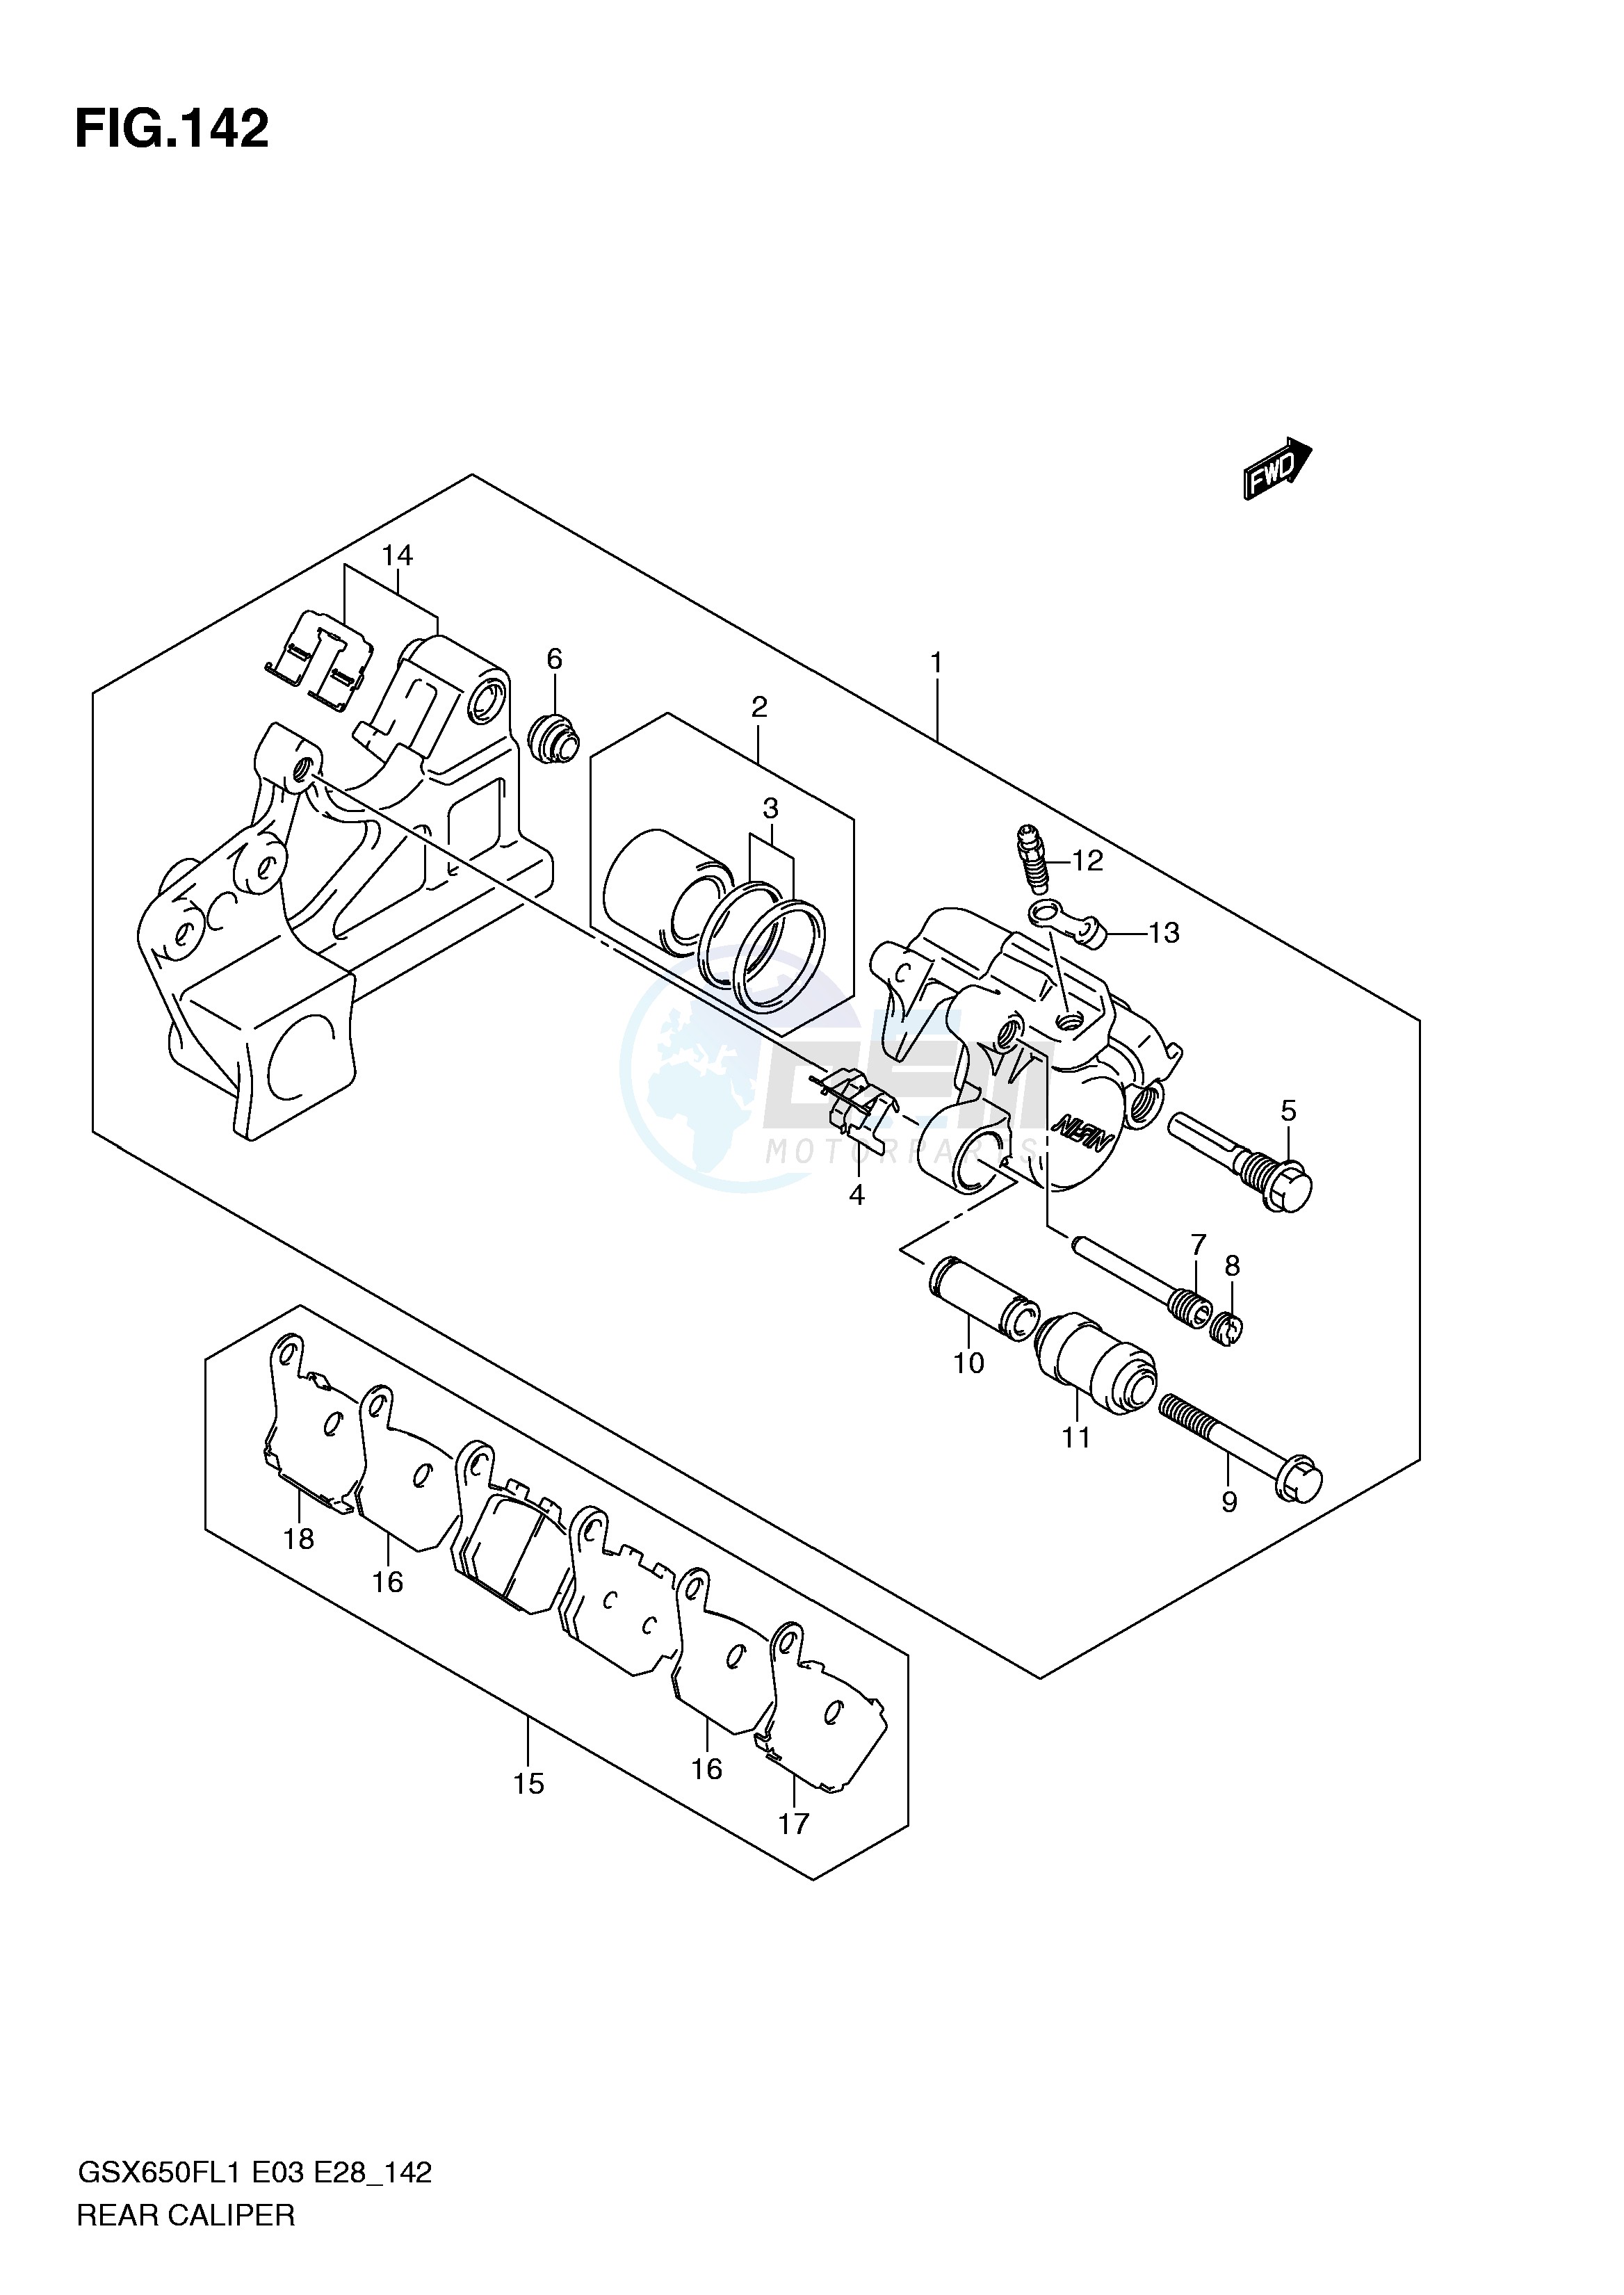 REAR CALIPER (GSX650FL1 E33) blueprint